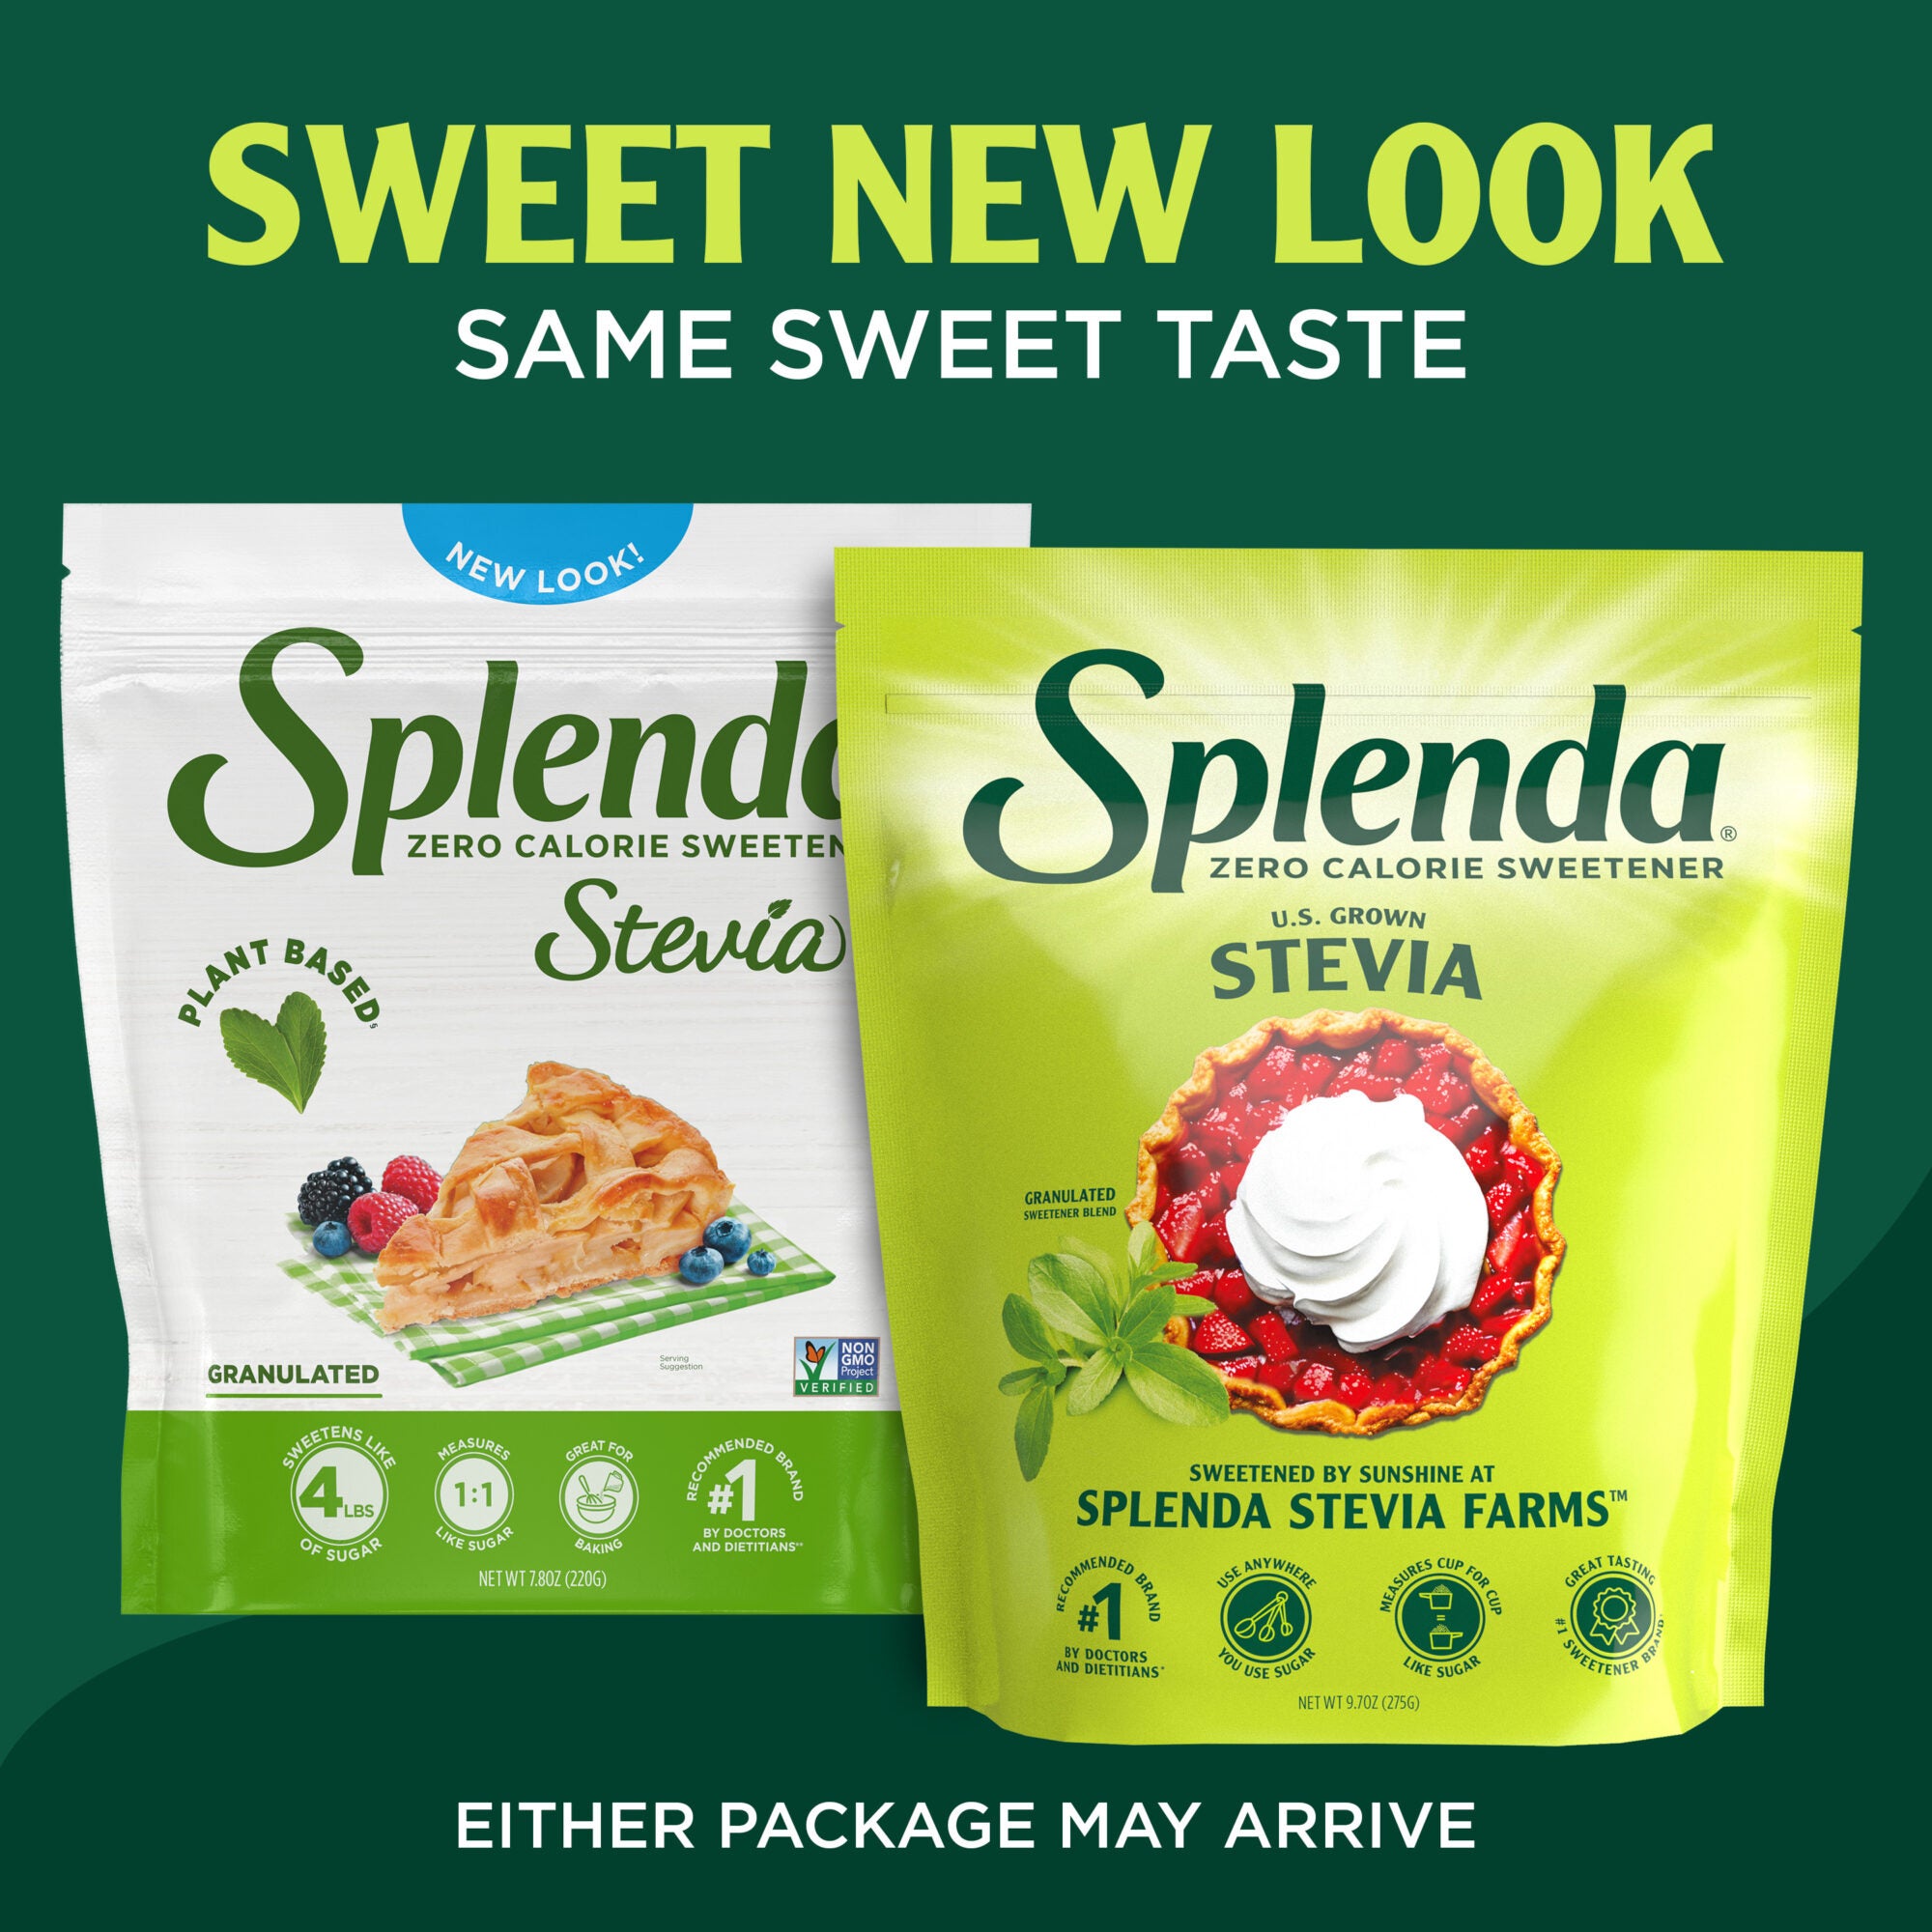 Splenda U.S. Grown Stevia Granulated - Same Sweet Taste